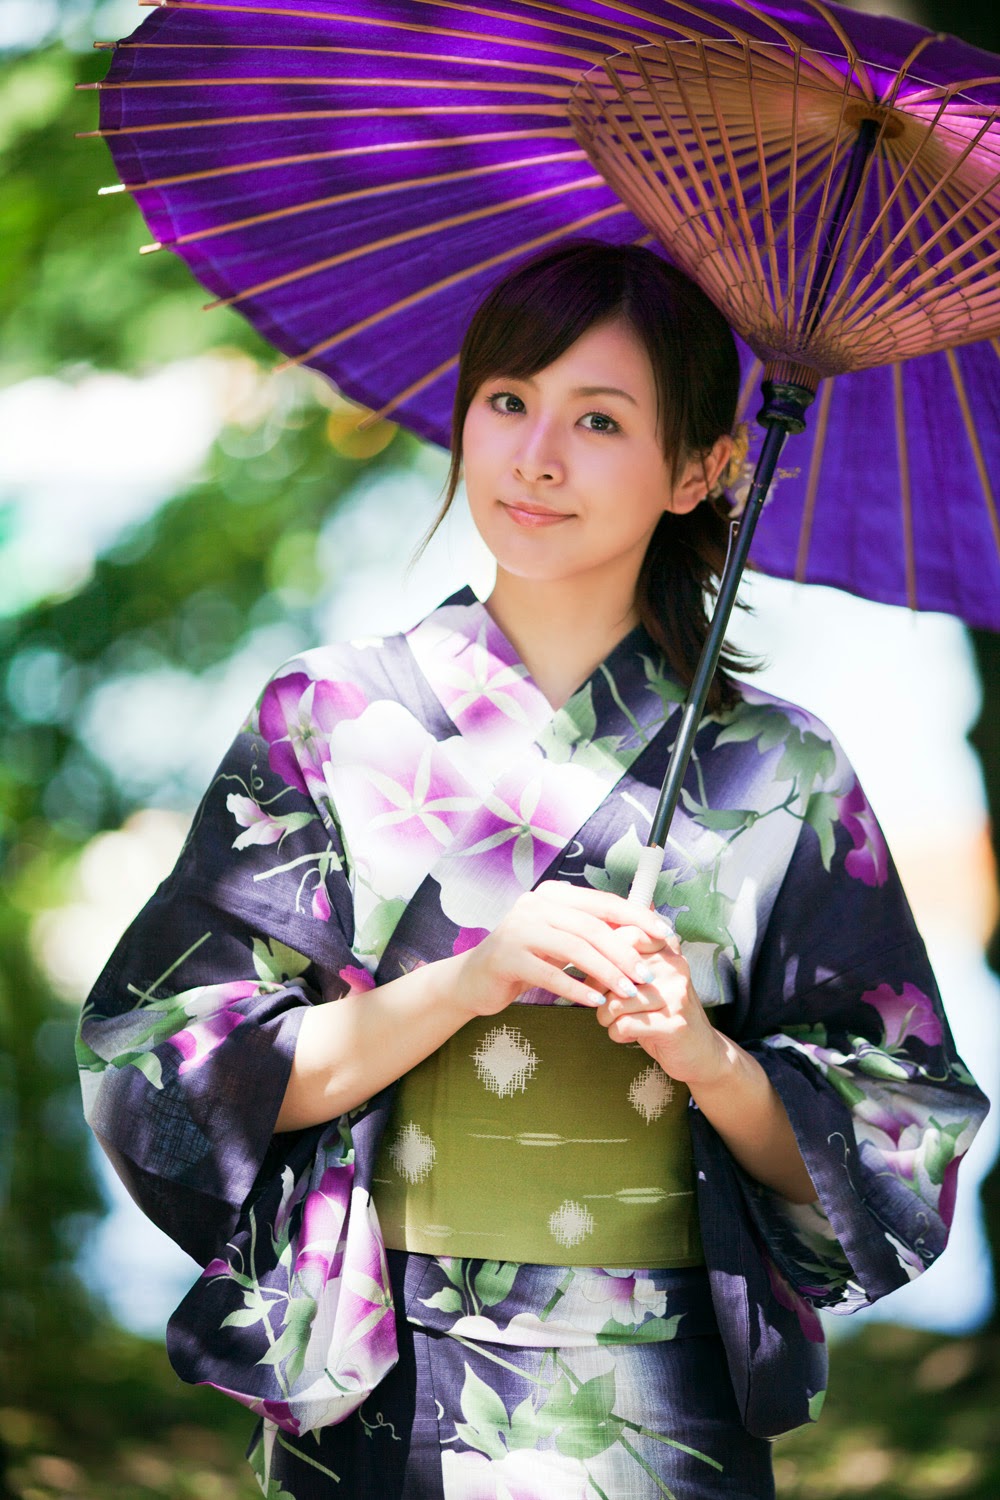 Yusuke Japan Blog: Japanese traditional umbrella Wa-gasa